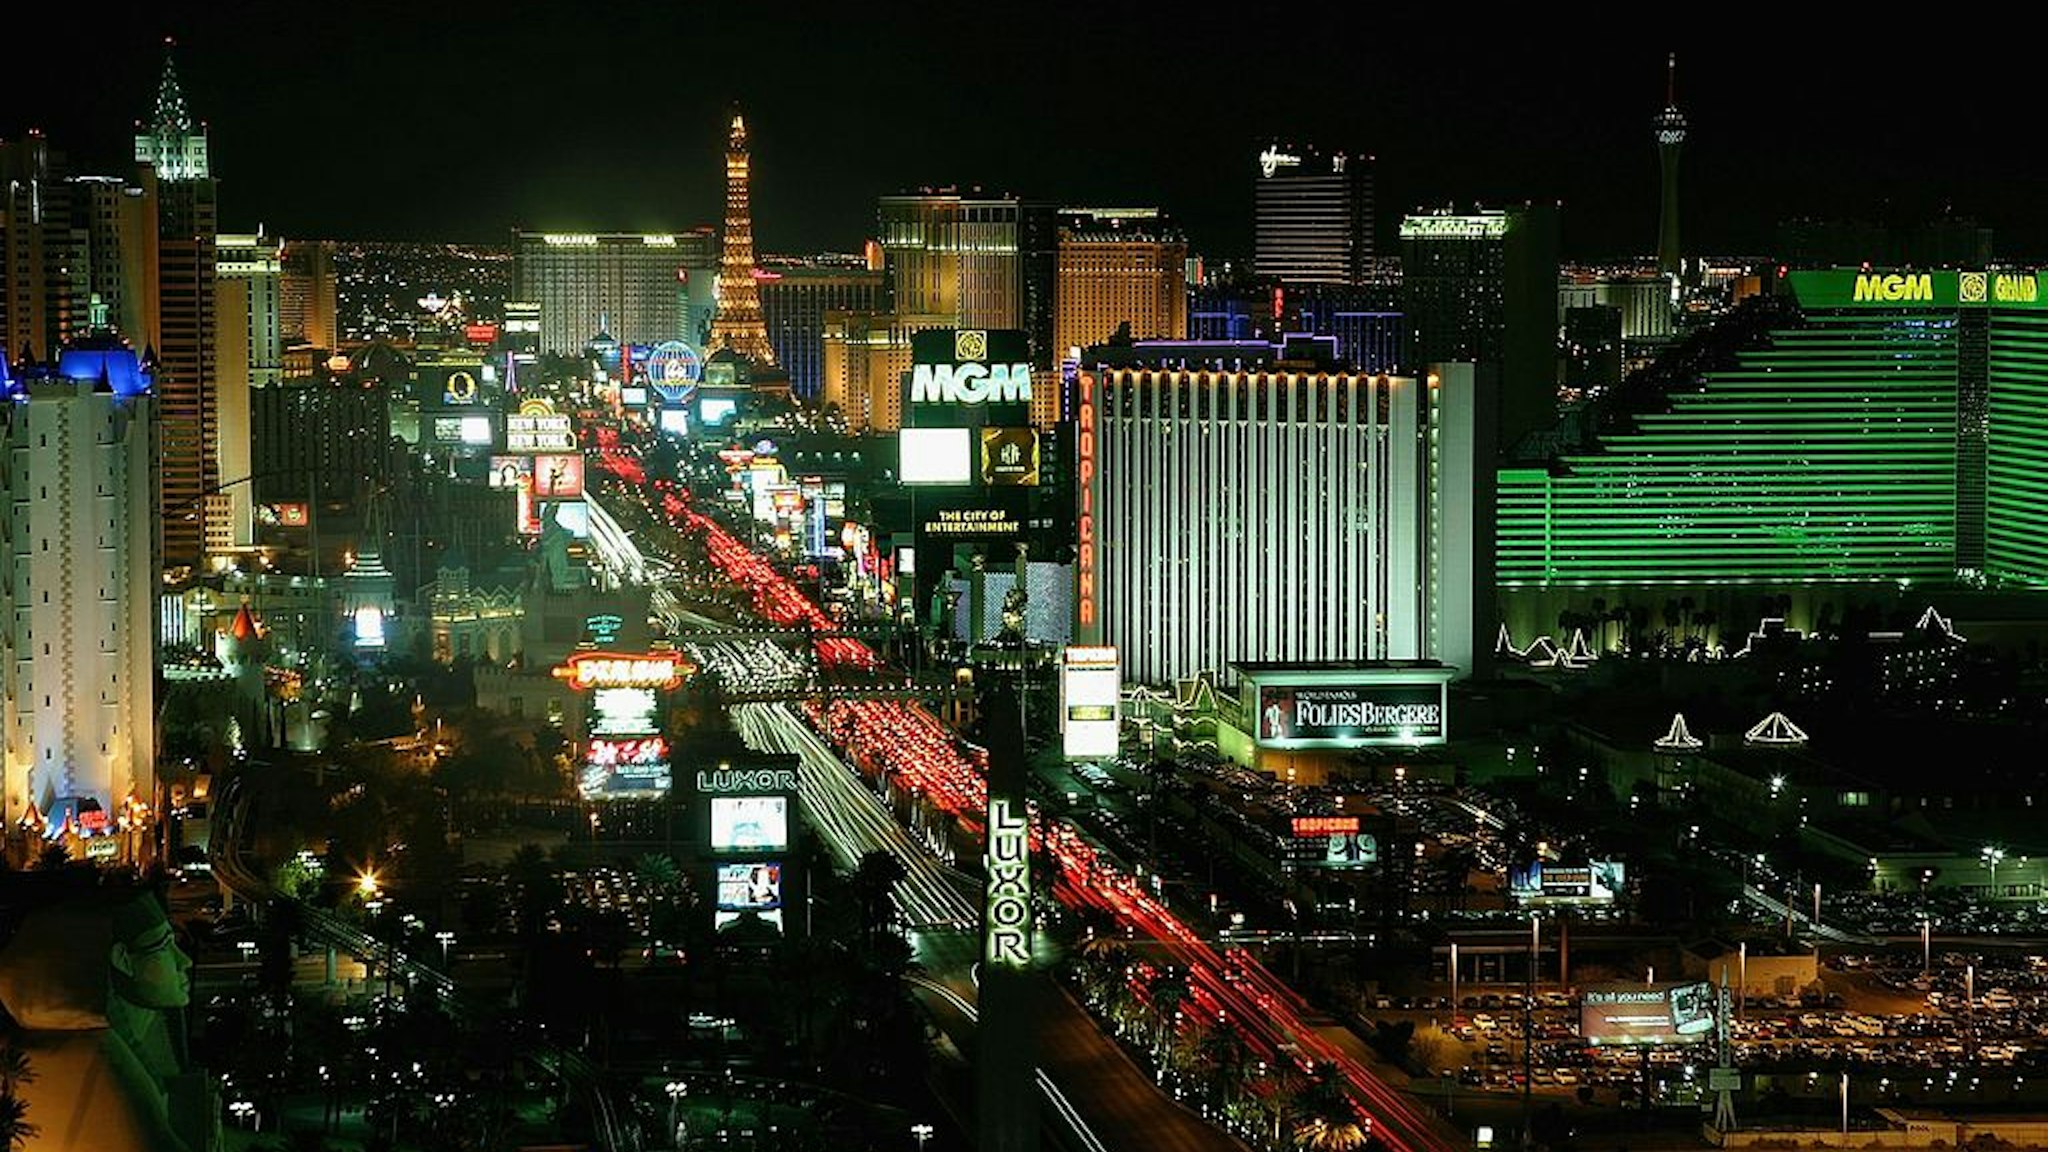 LAS VEGAS - FEBRUARY 25: Hotel-casinos on the Las Vegas Strip are seen on February 25, 2006 in Las Vegas, Nevada.